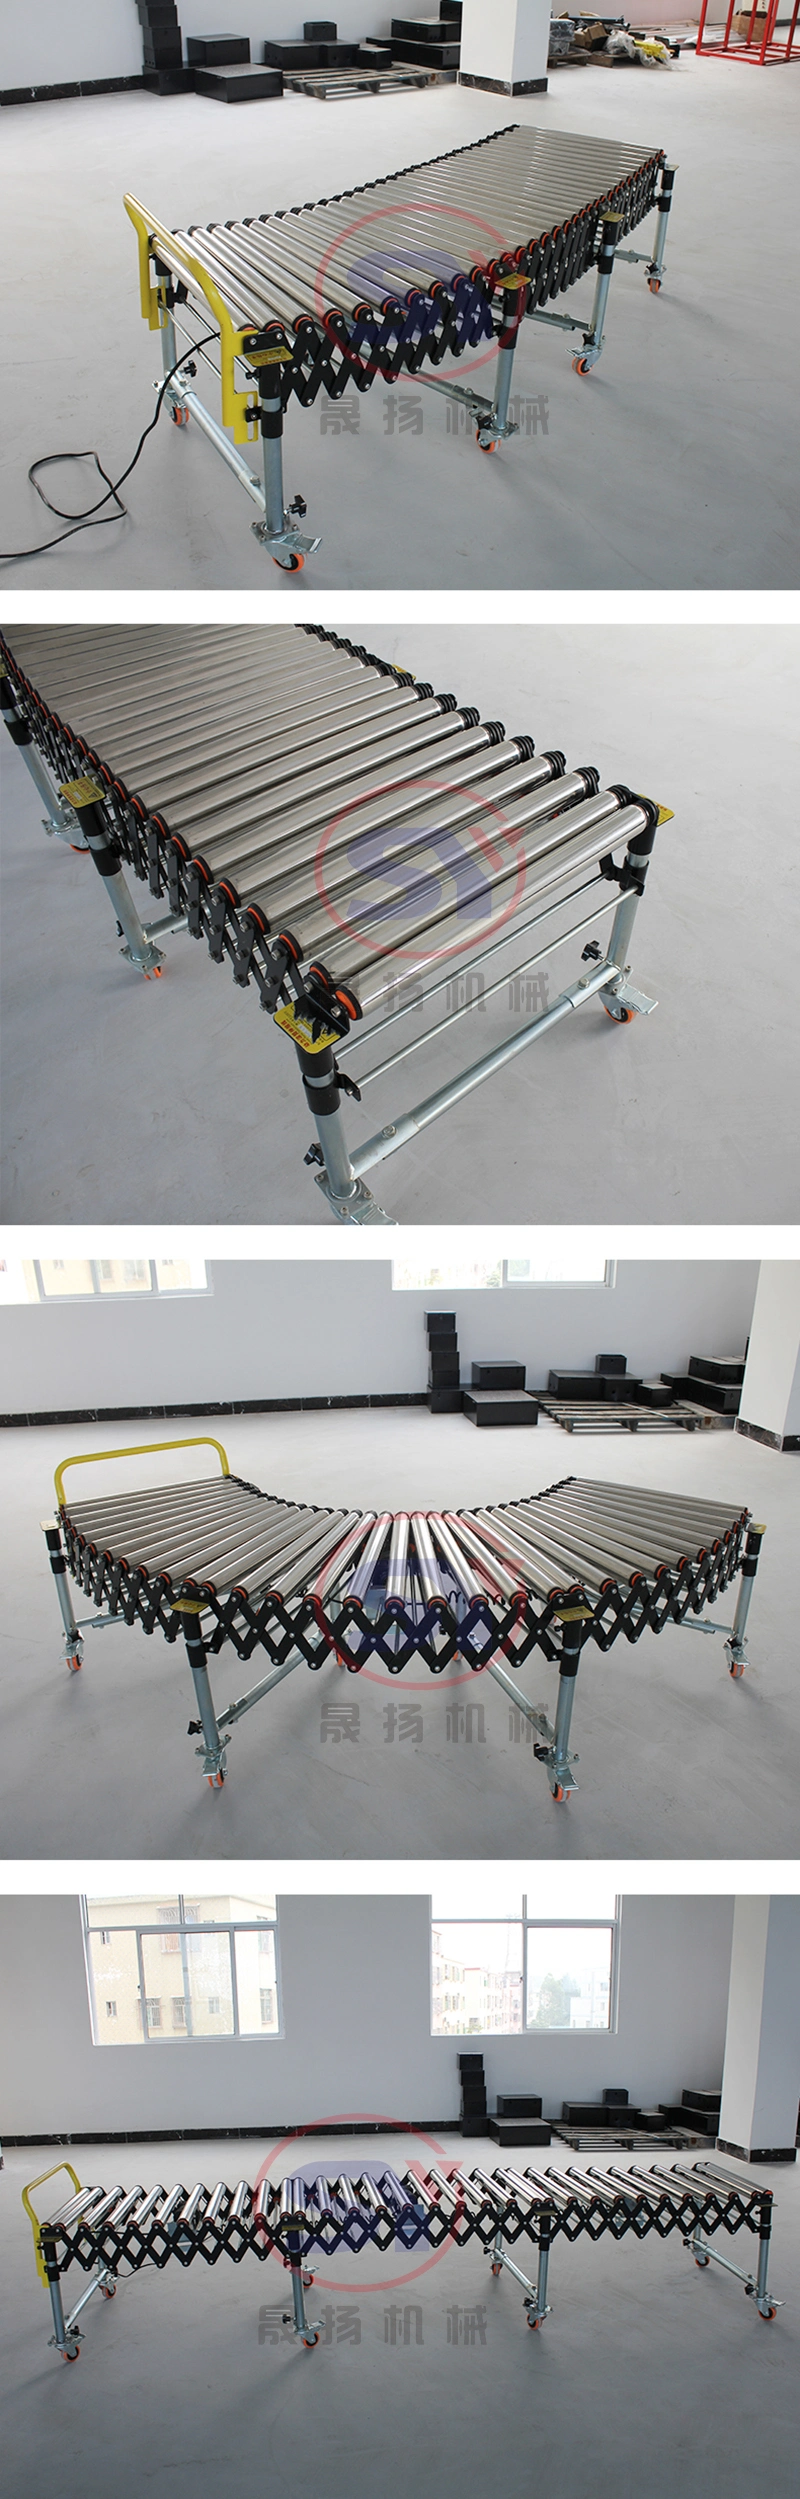 Hot Sale Flexible Conveyors Telescopic Power Coating Roller Conveyor with Factory Price